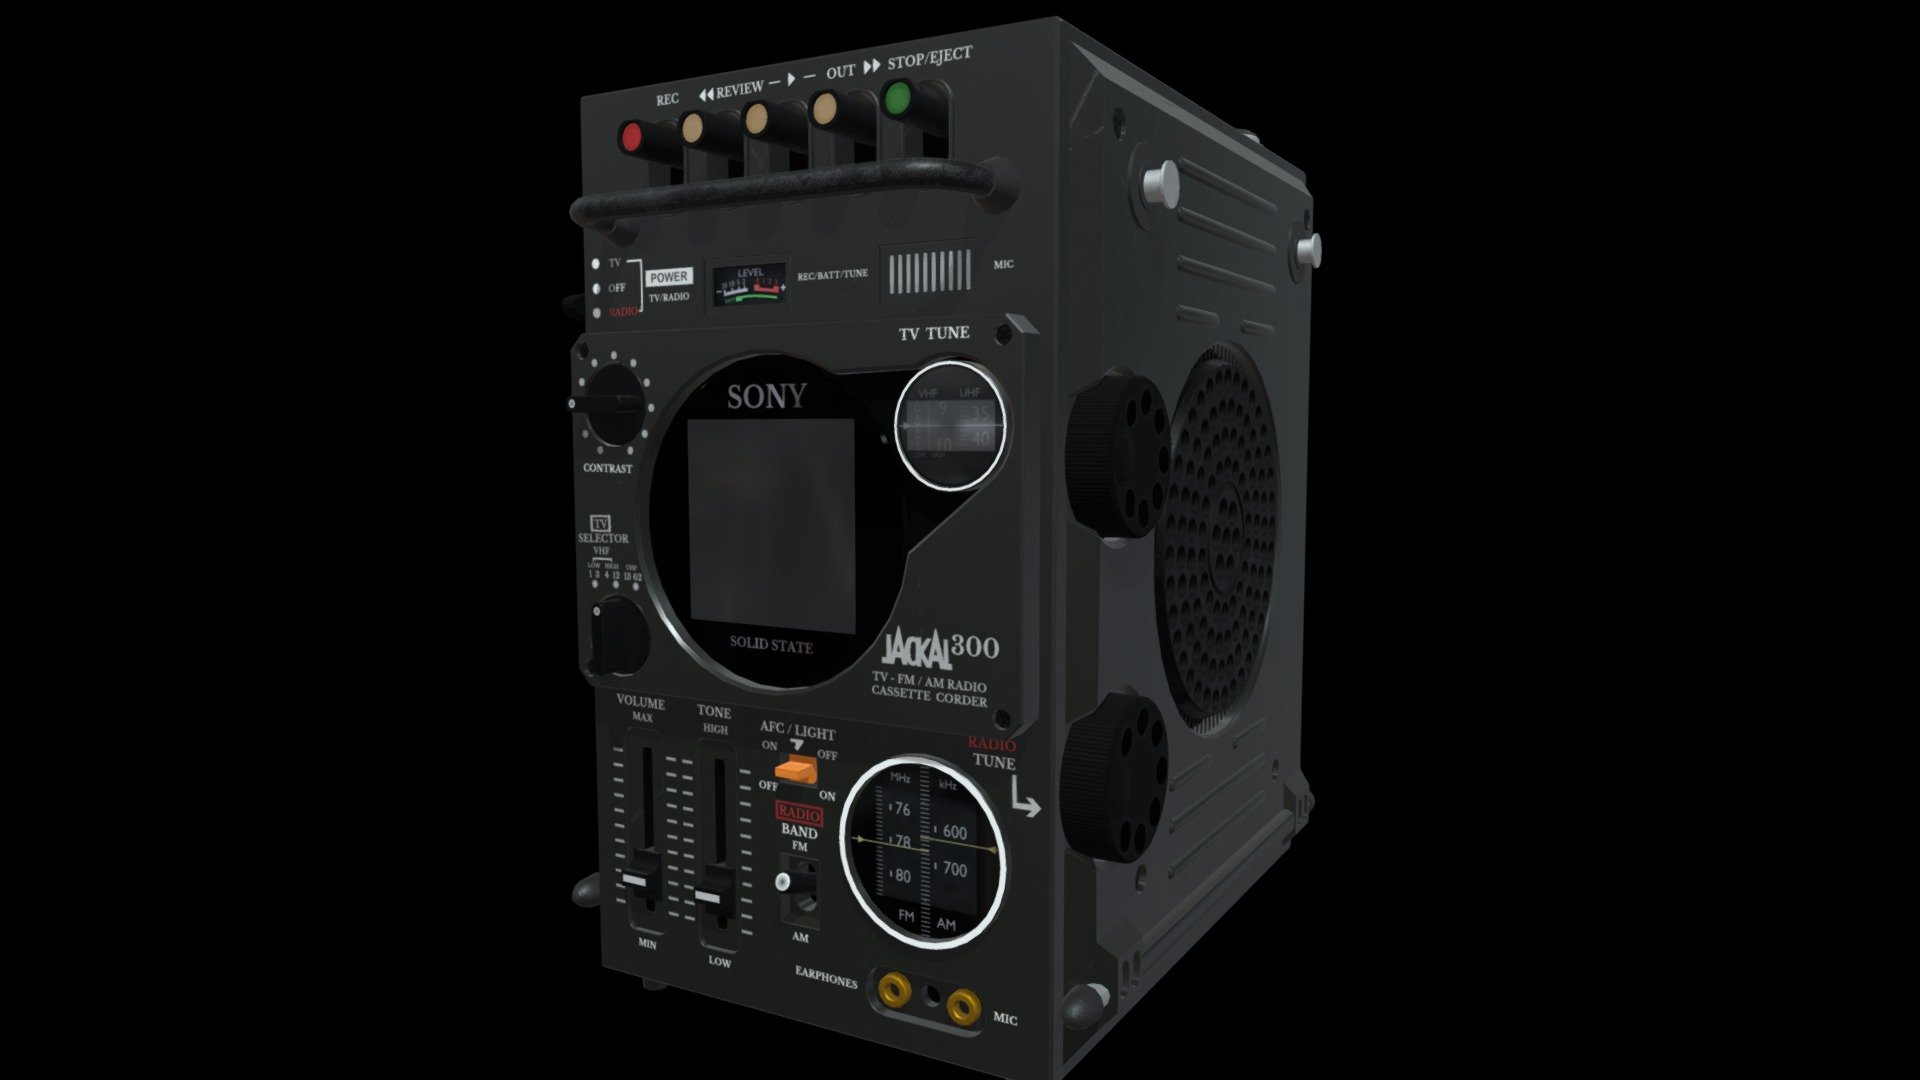 Sony FX-300 Jackal TV FM AM Cassette Recorder - 3D model by